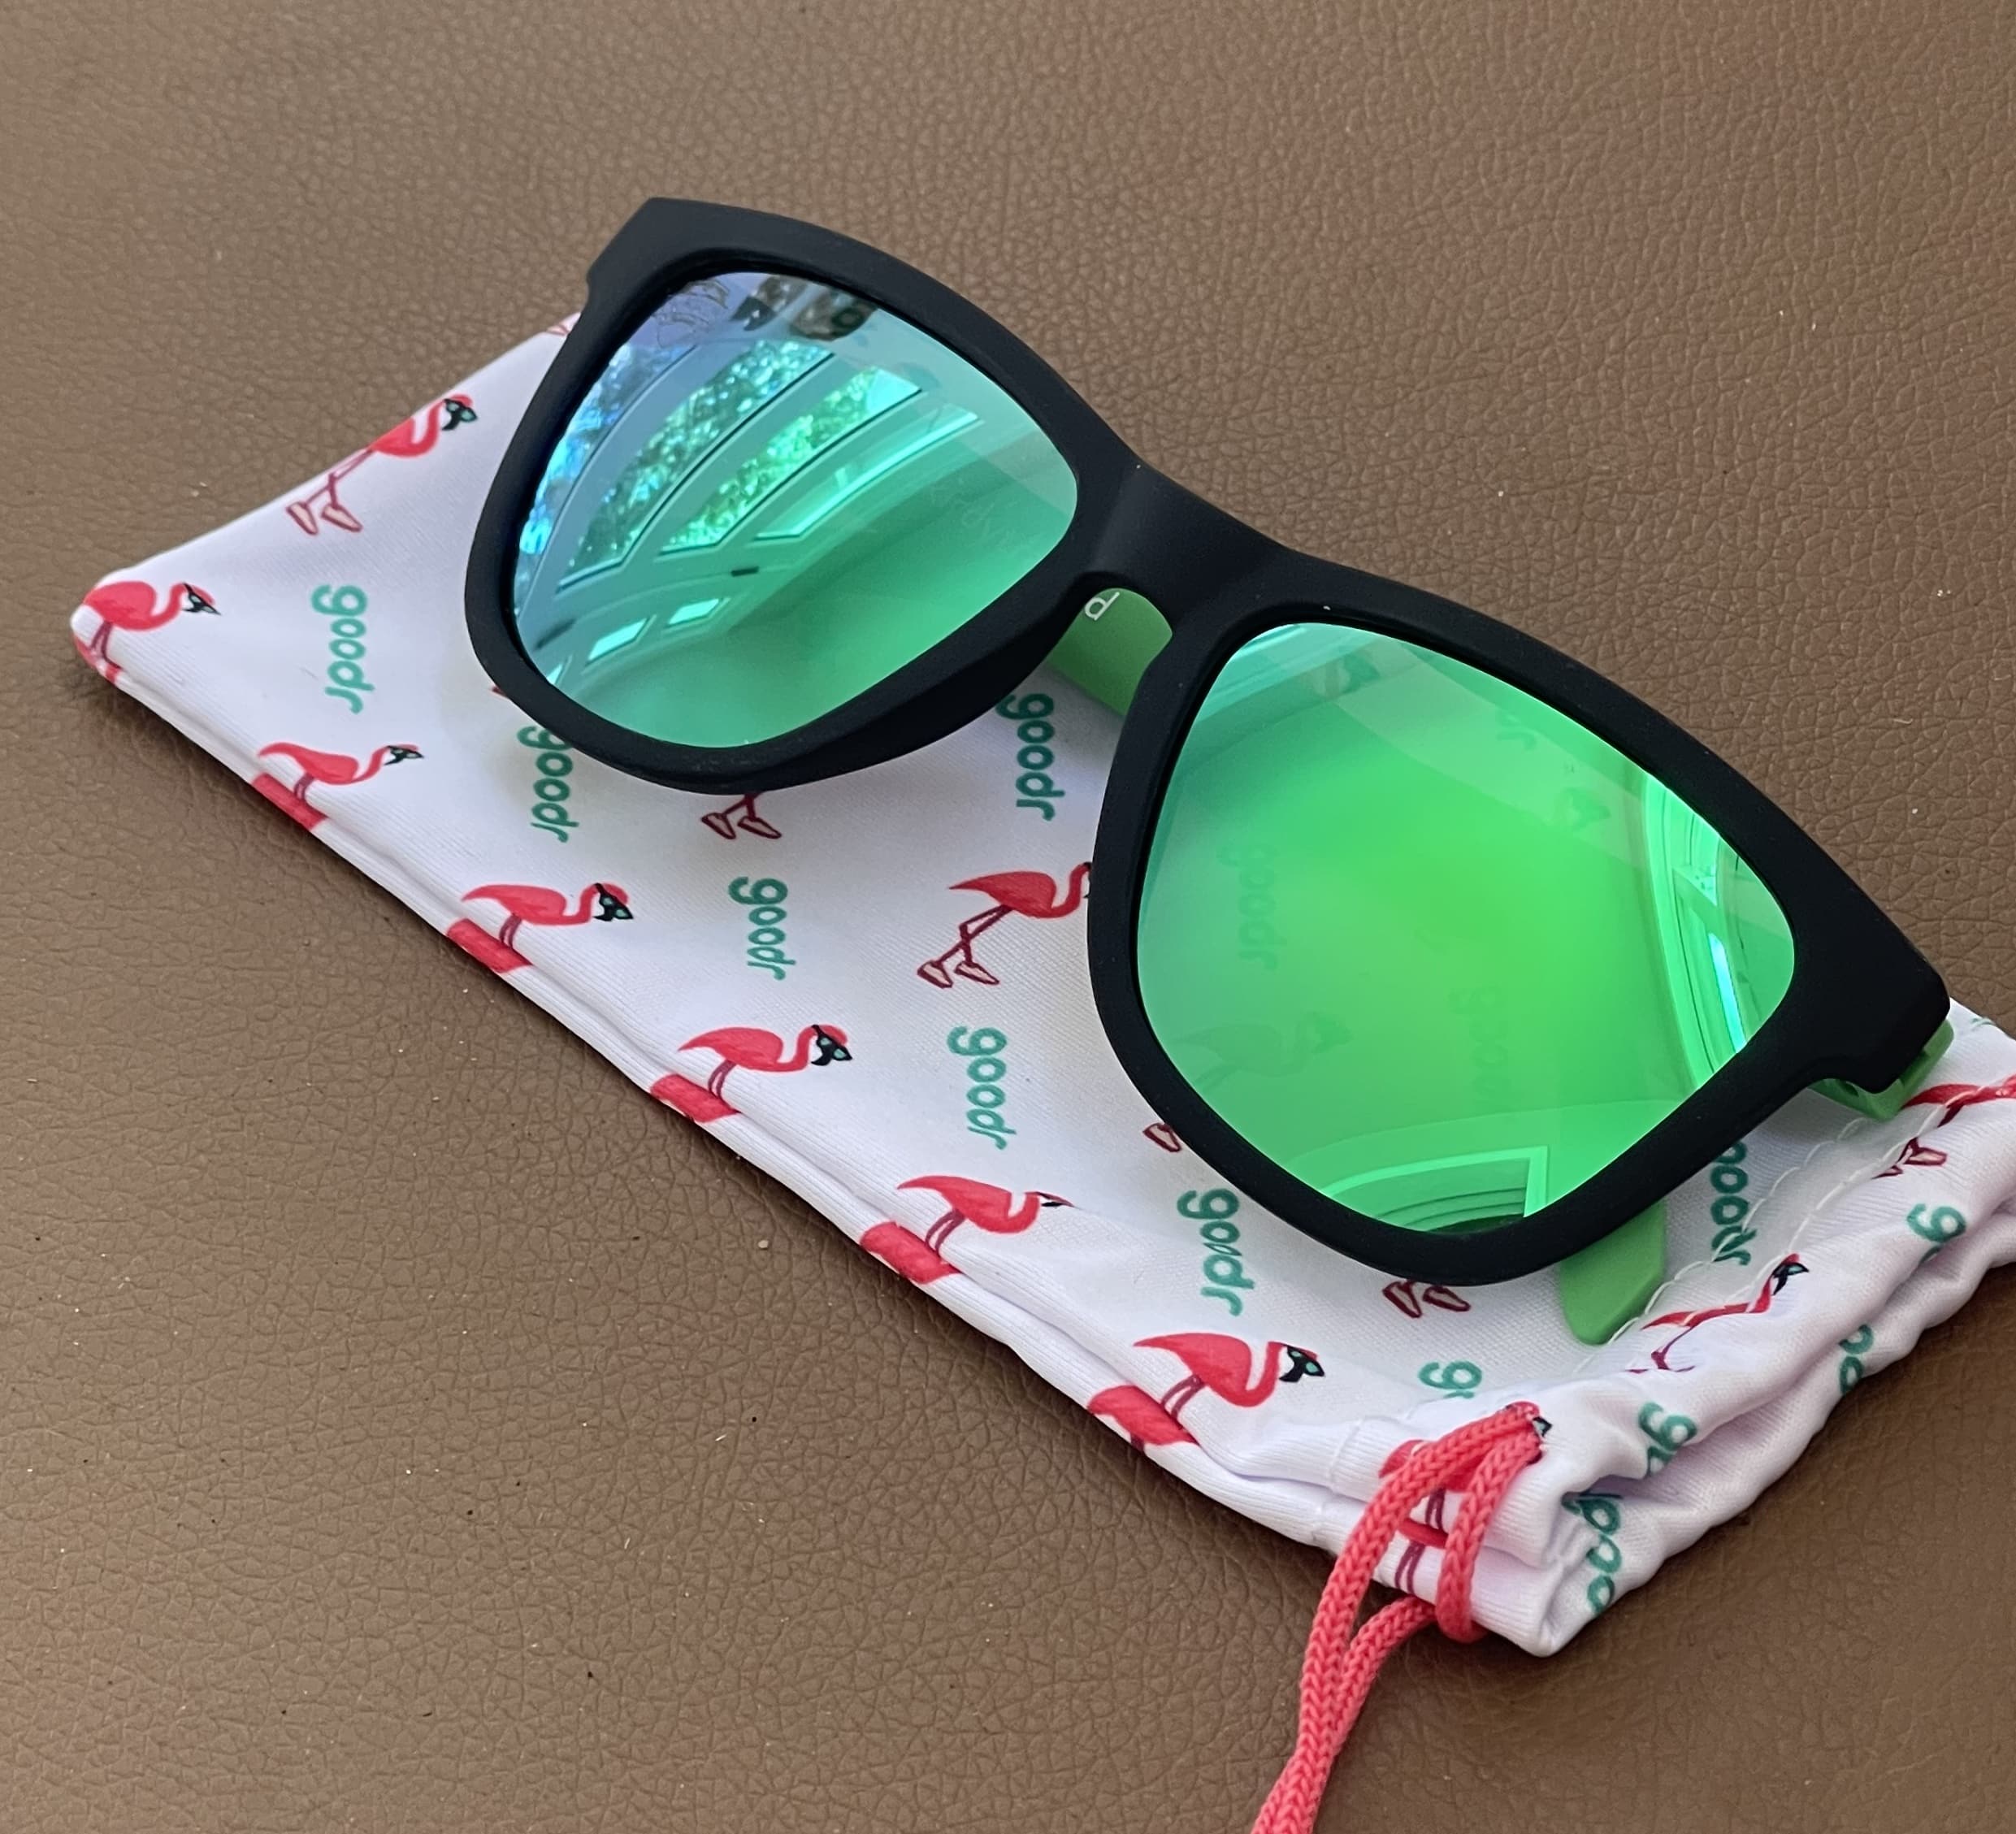 goodr Green Sunglasses  #1 Polarized Sunglasses — goodr sunglasses